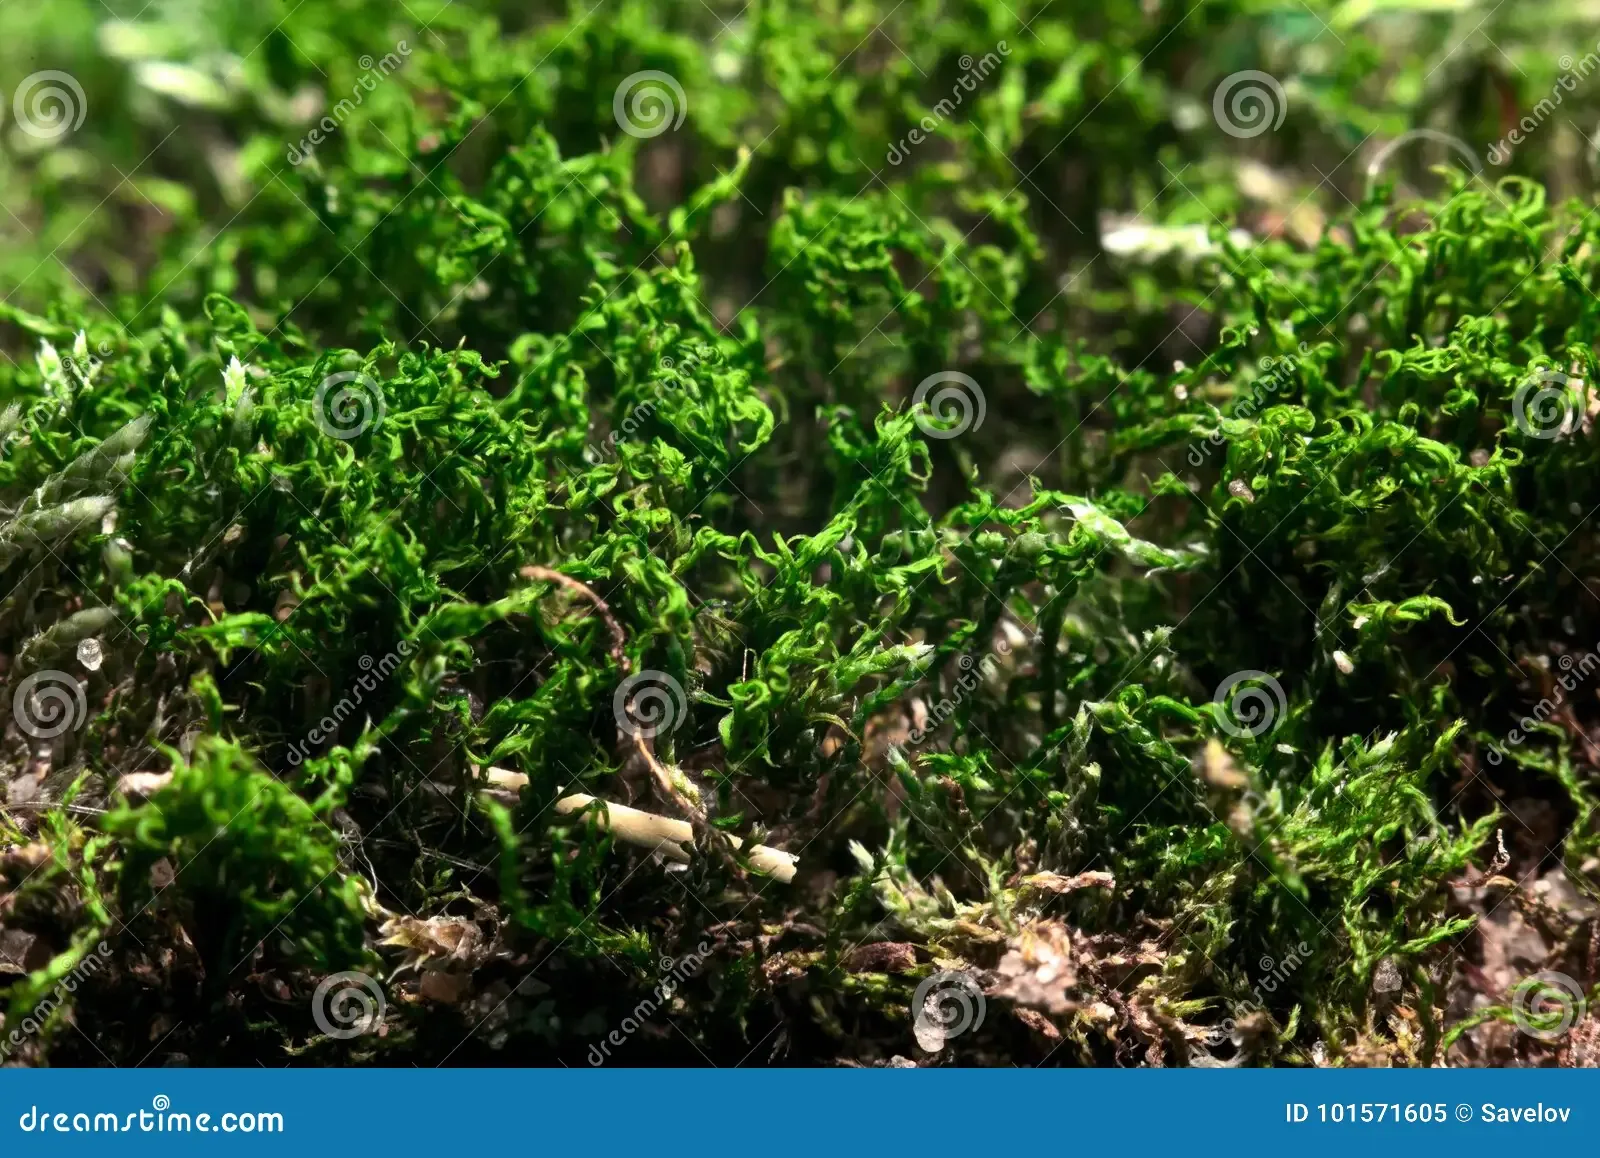 texture-moss-macro-hypnum-cupressiforme-moss-macro-hypnum-cupressiforme-101571605.jpg